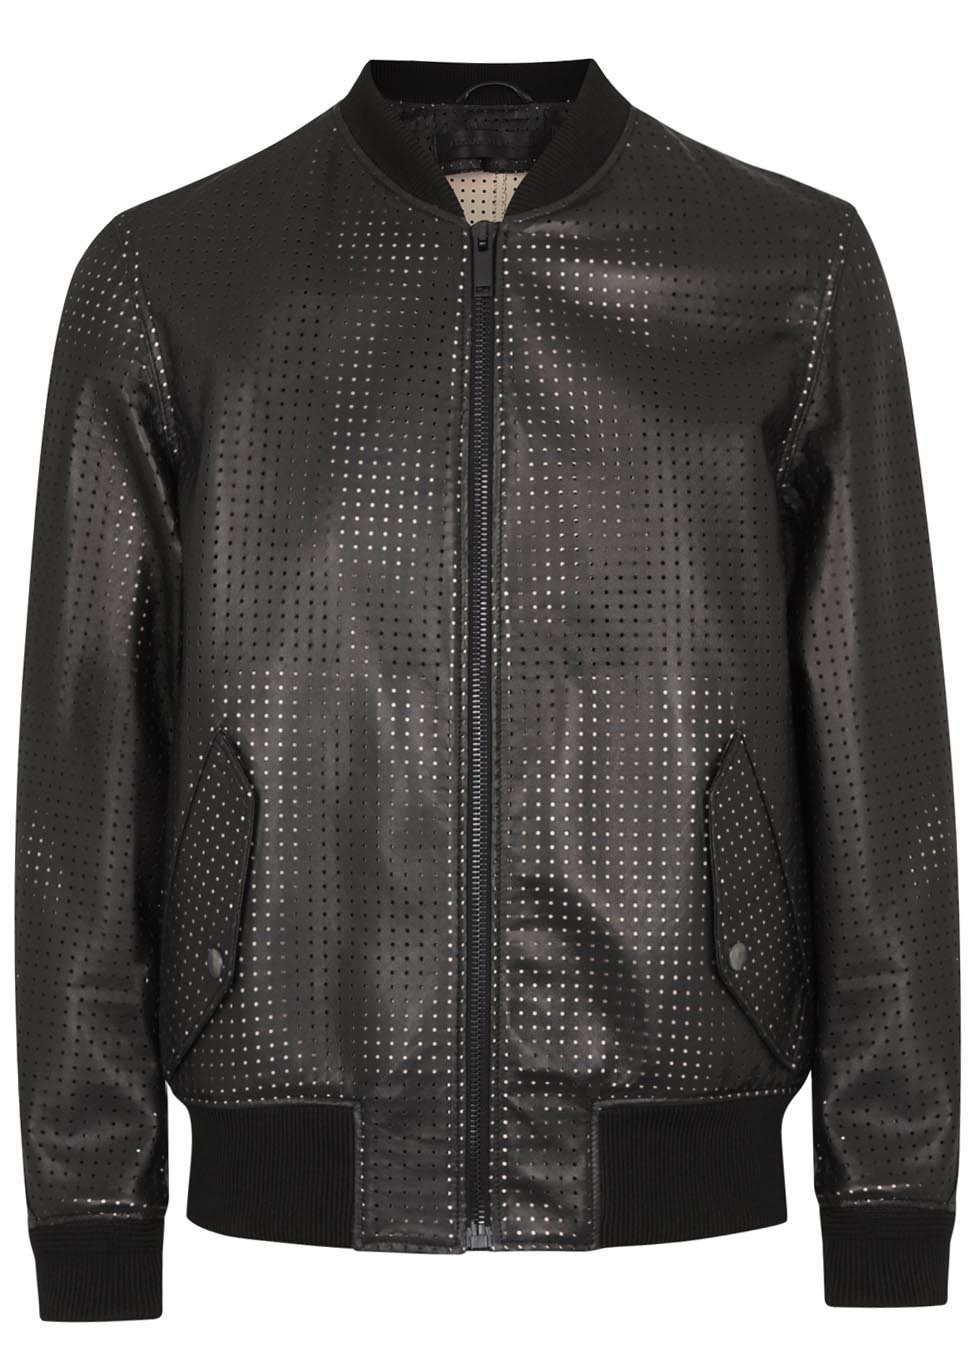 Black perforated leather bomber jacket